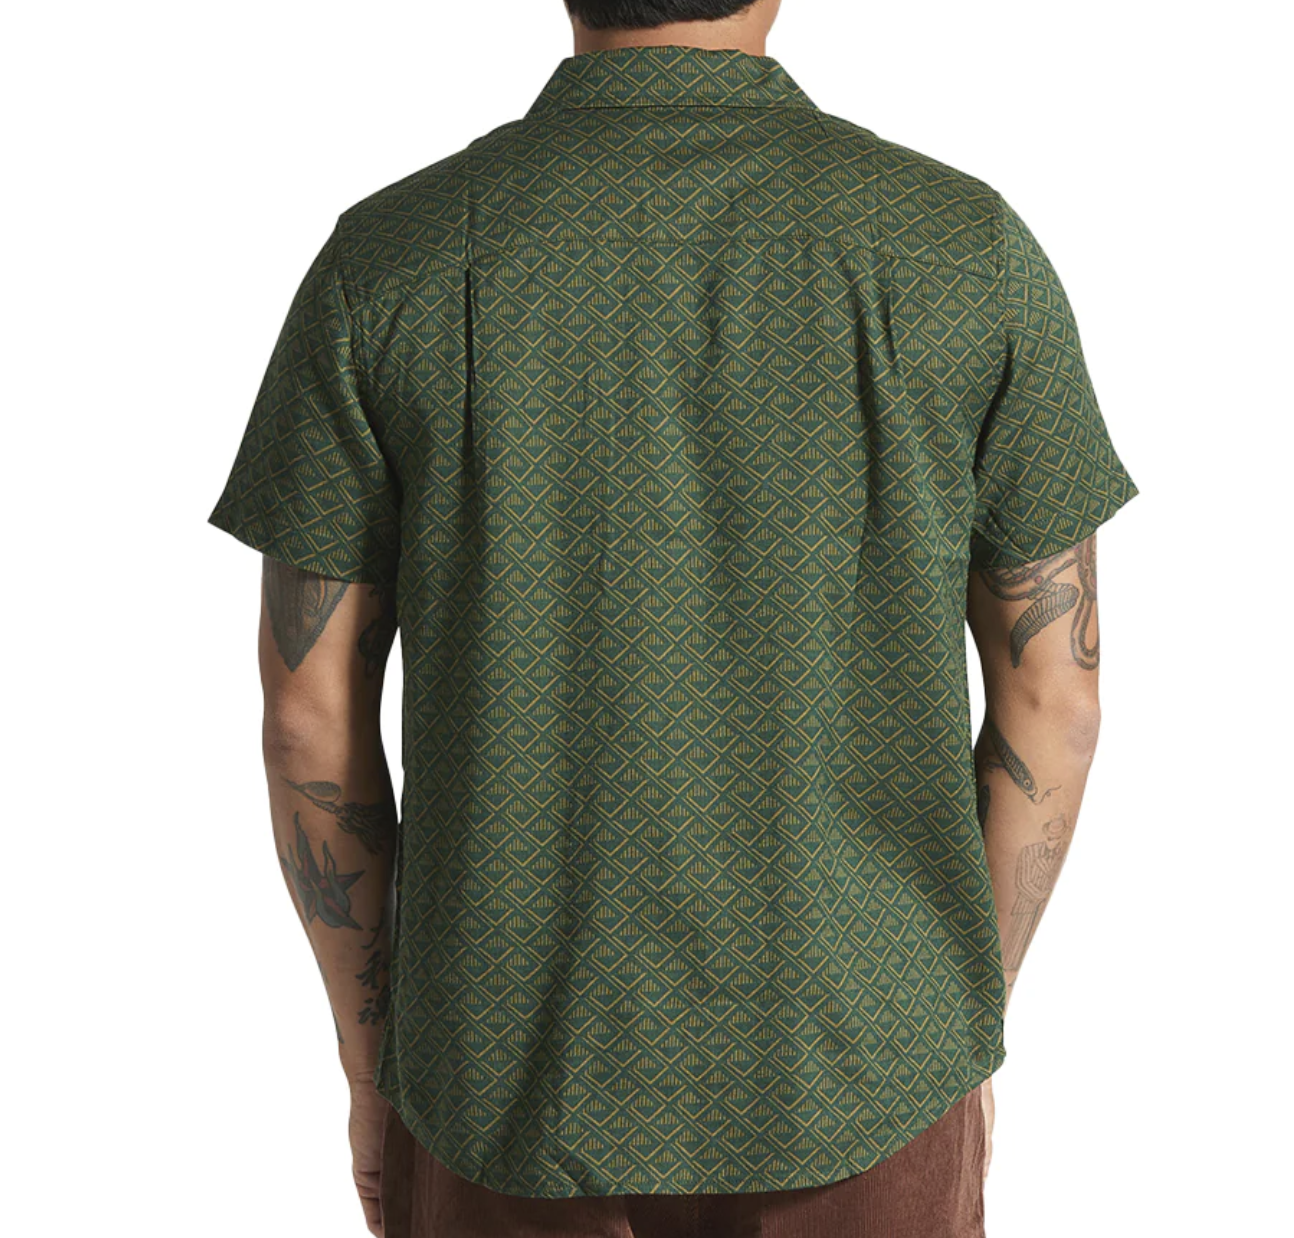 Charter Print S/S Shirt - Trekking Green Tile